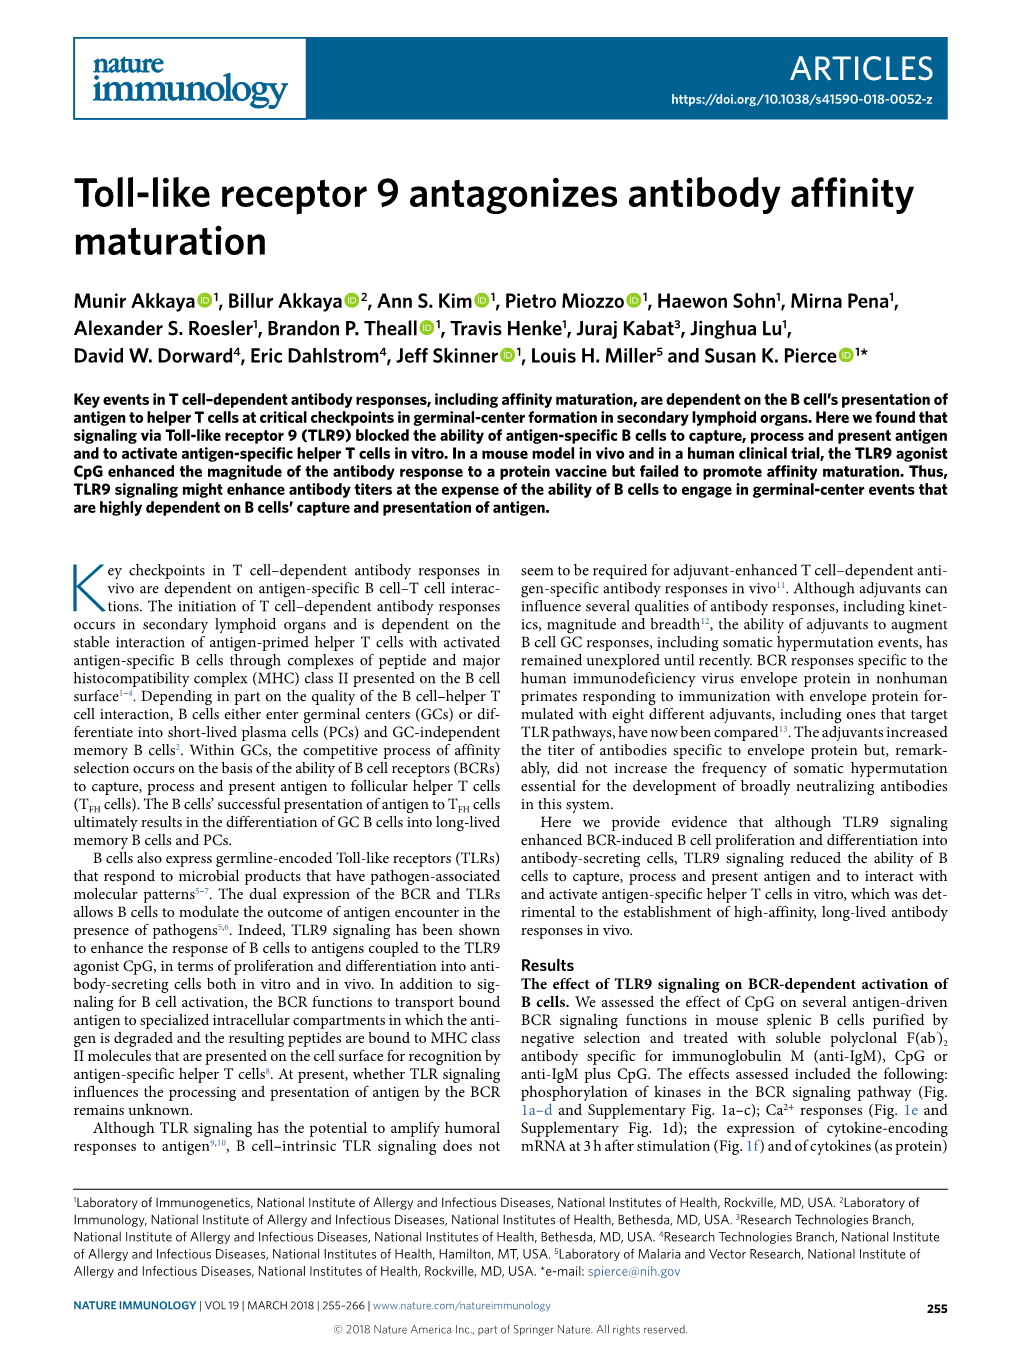 Toll-Like Receptor 9 Antagonizes Antibody Affinity Maturation